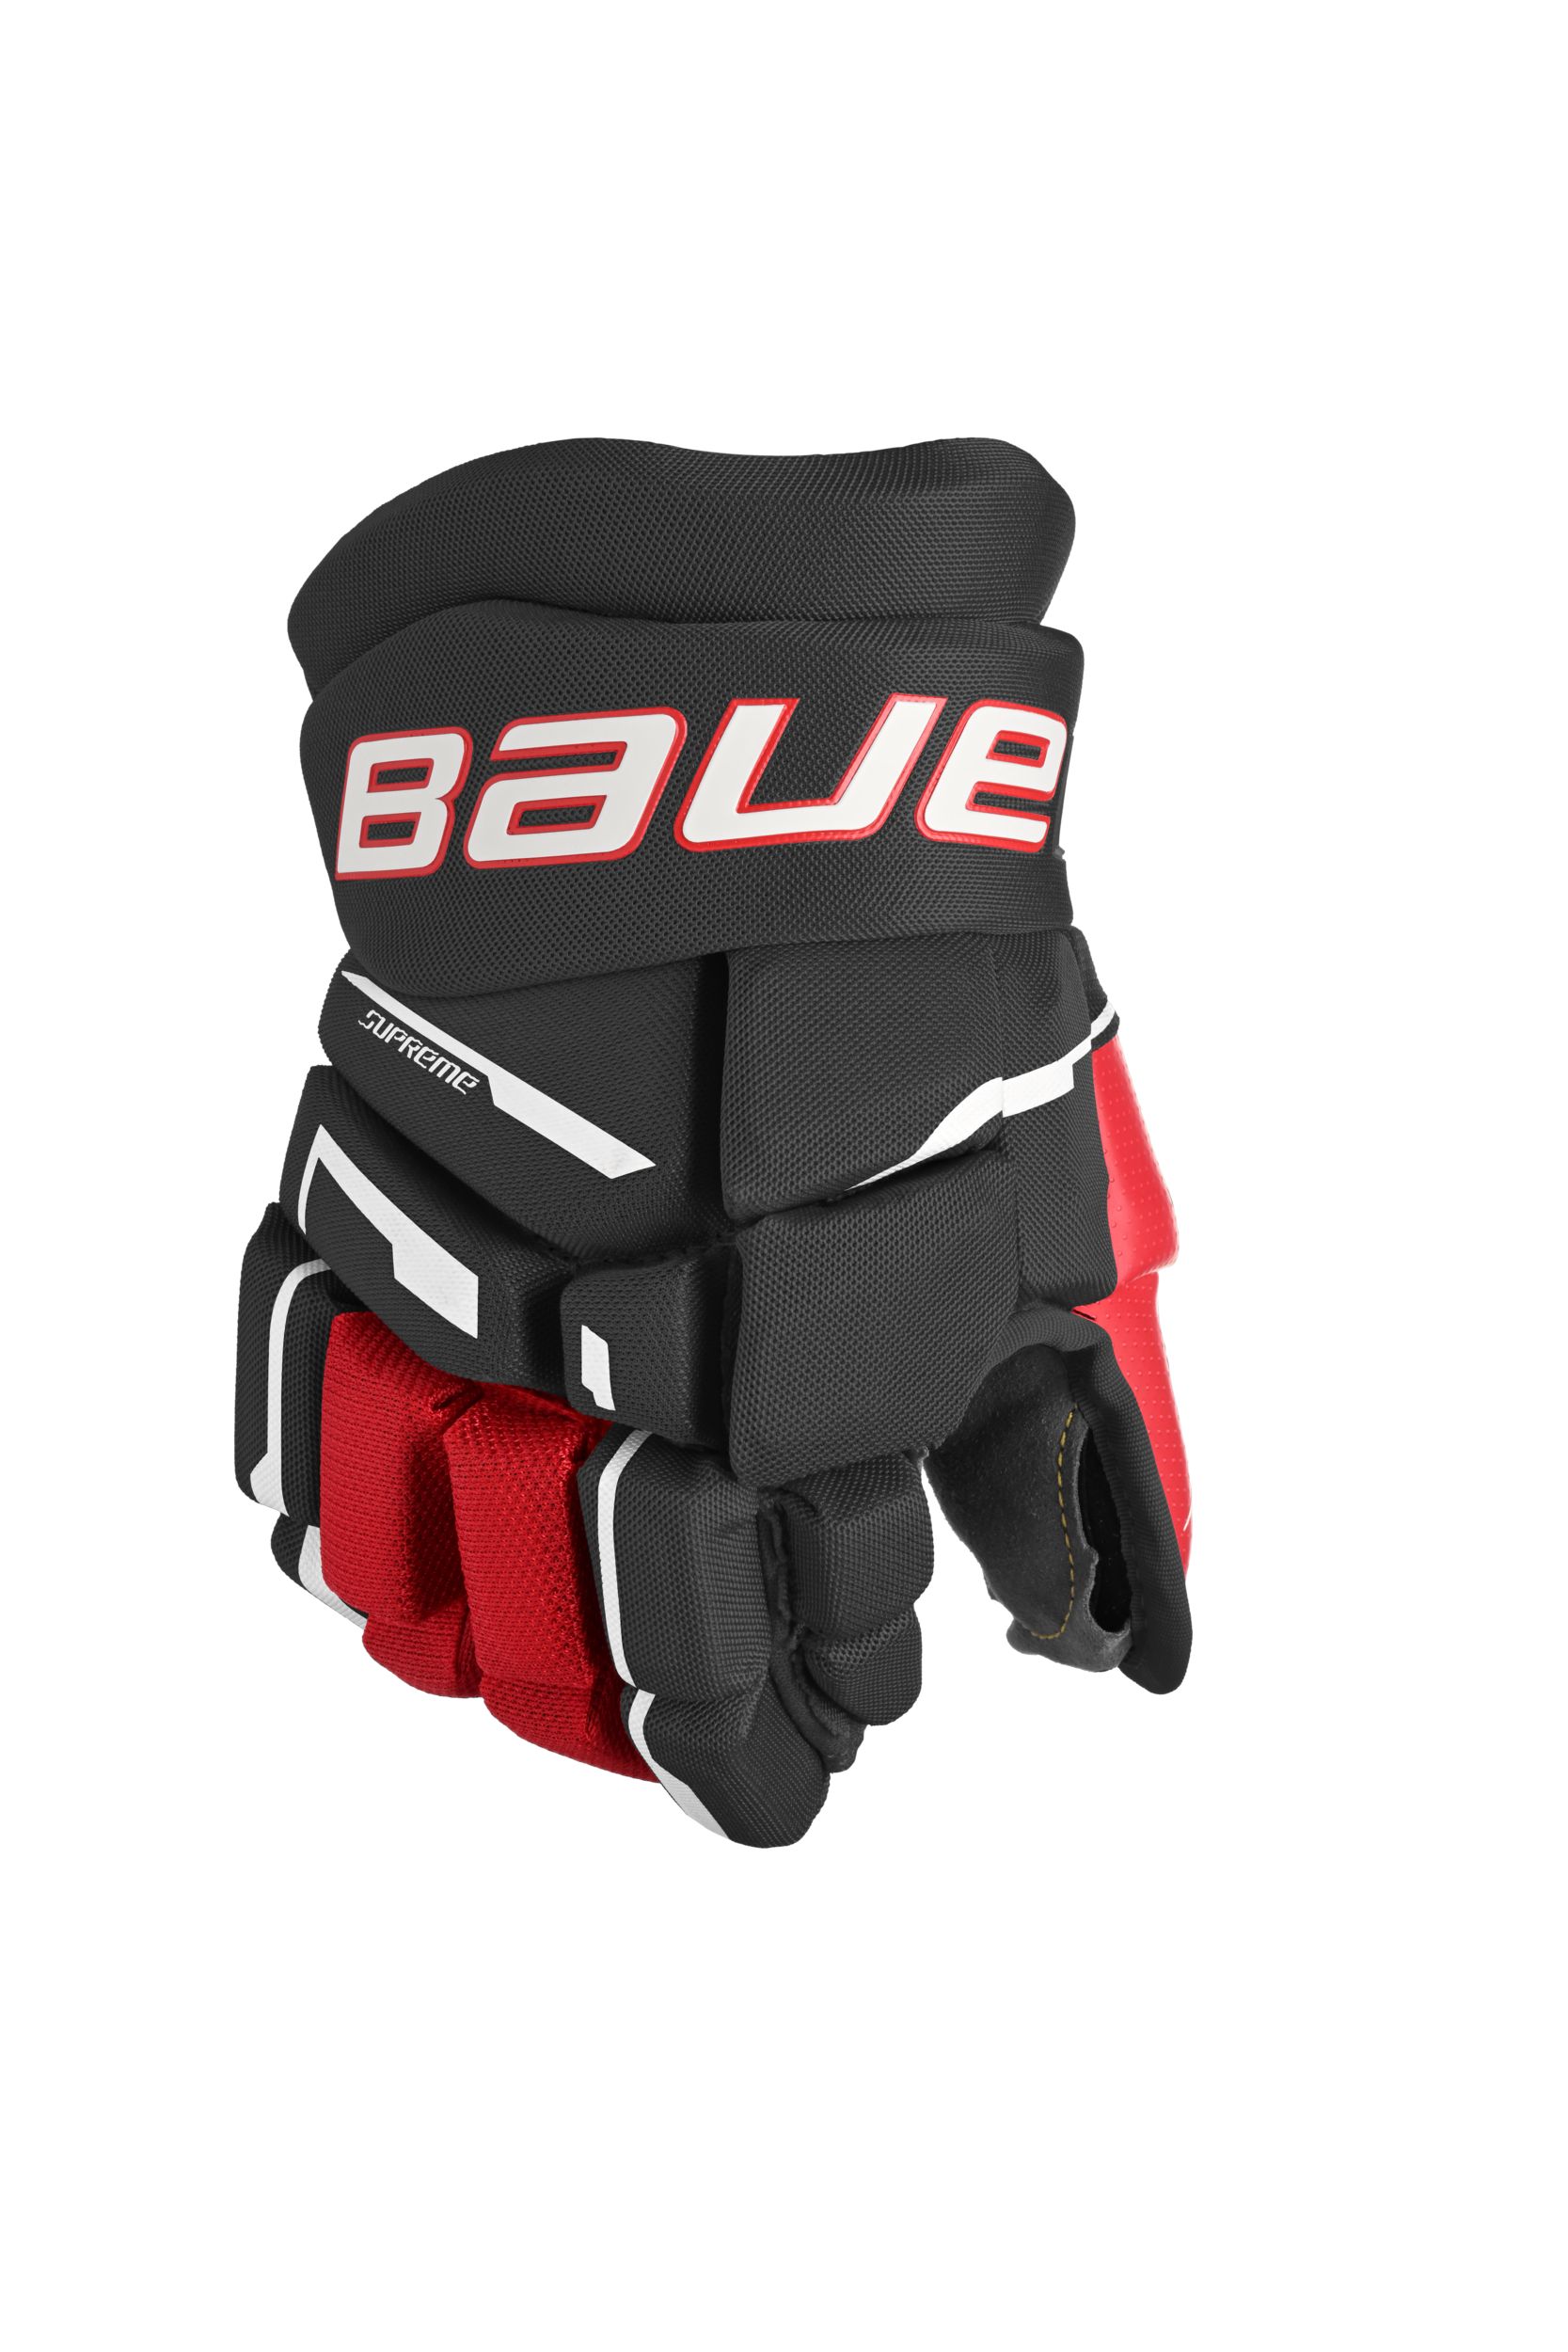 Image of Bauer Supreme M3 Junior Hockey Gloves